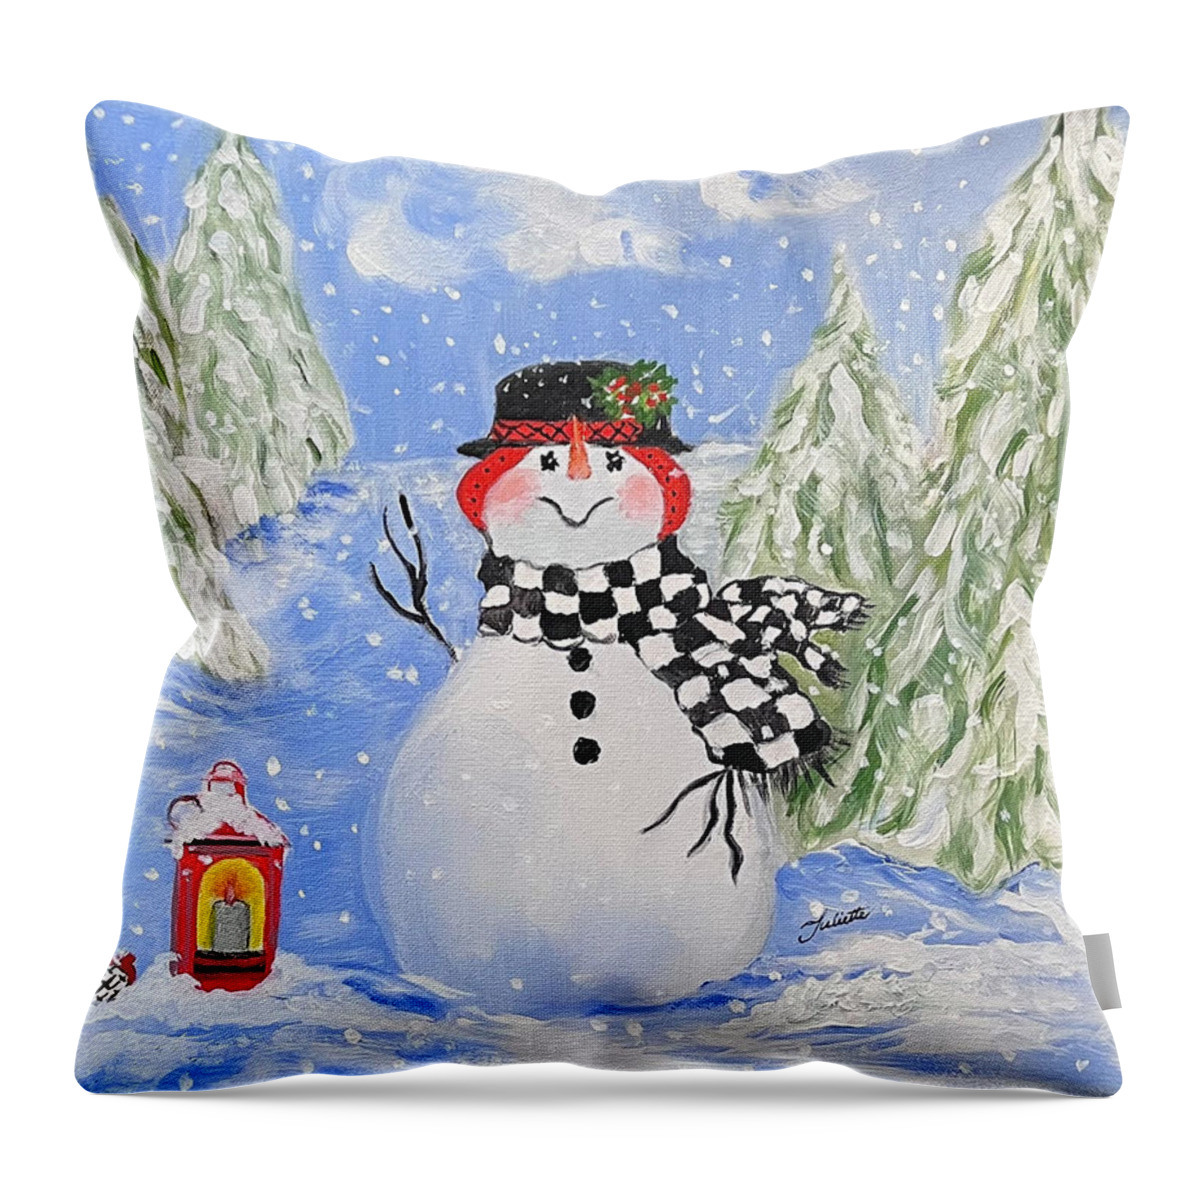 Snowman Throw Pillow featuring the painting Sammy the Snowman by Juliette Becker